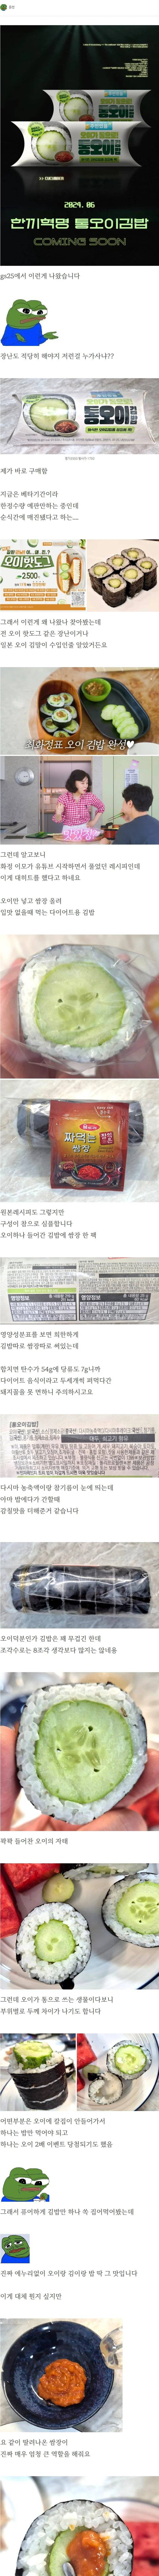 GS25 통오이 김밥이랑 평냉육수 후기 뜸 | 인스티즈